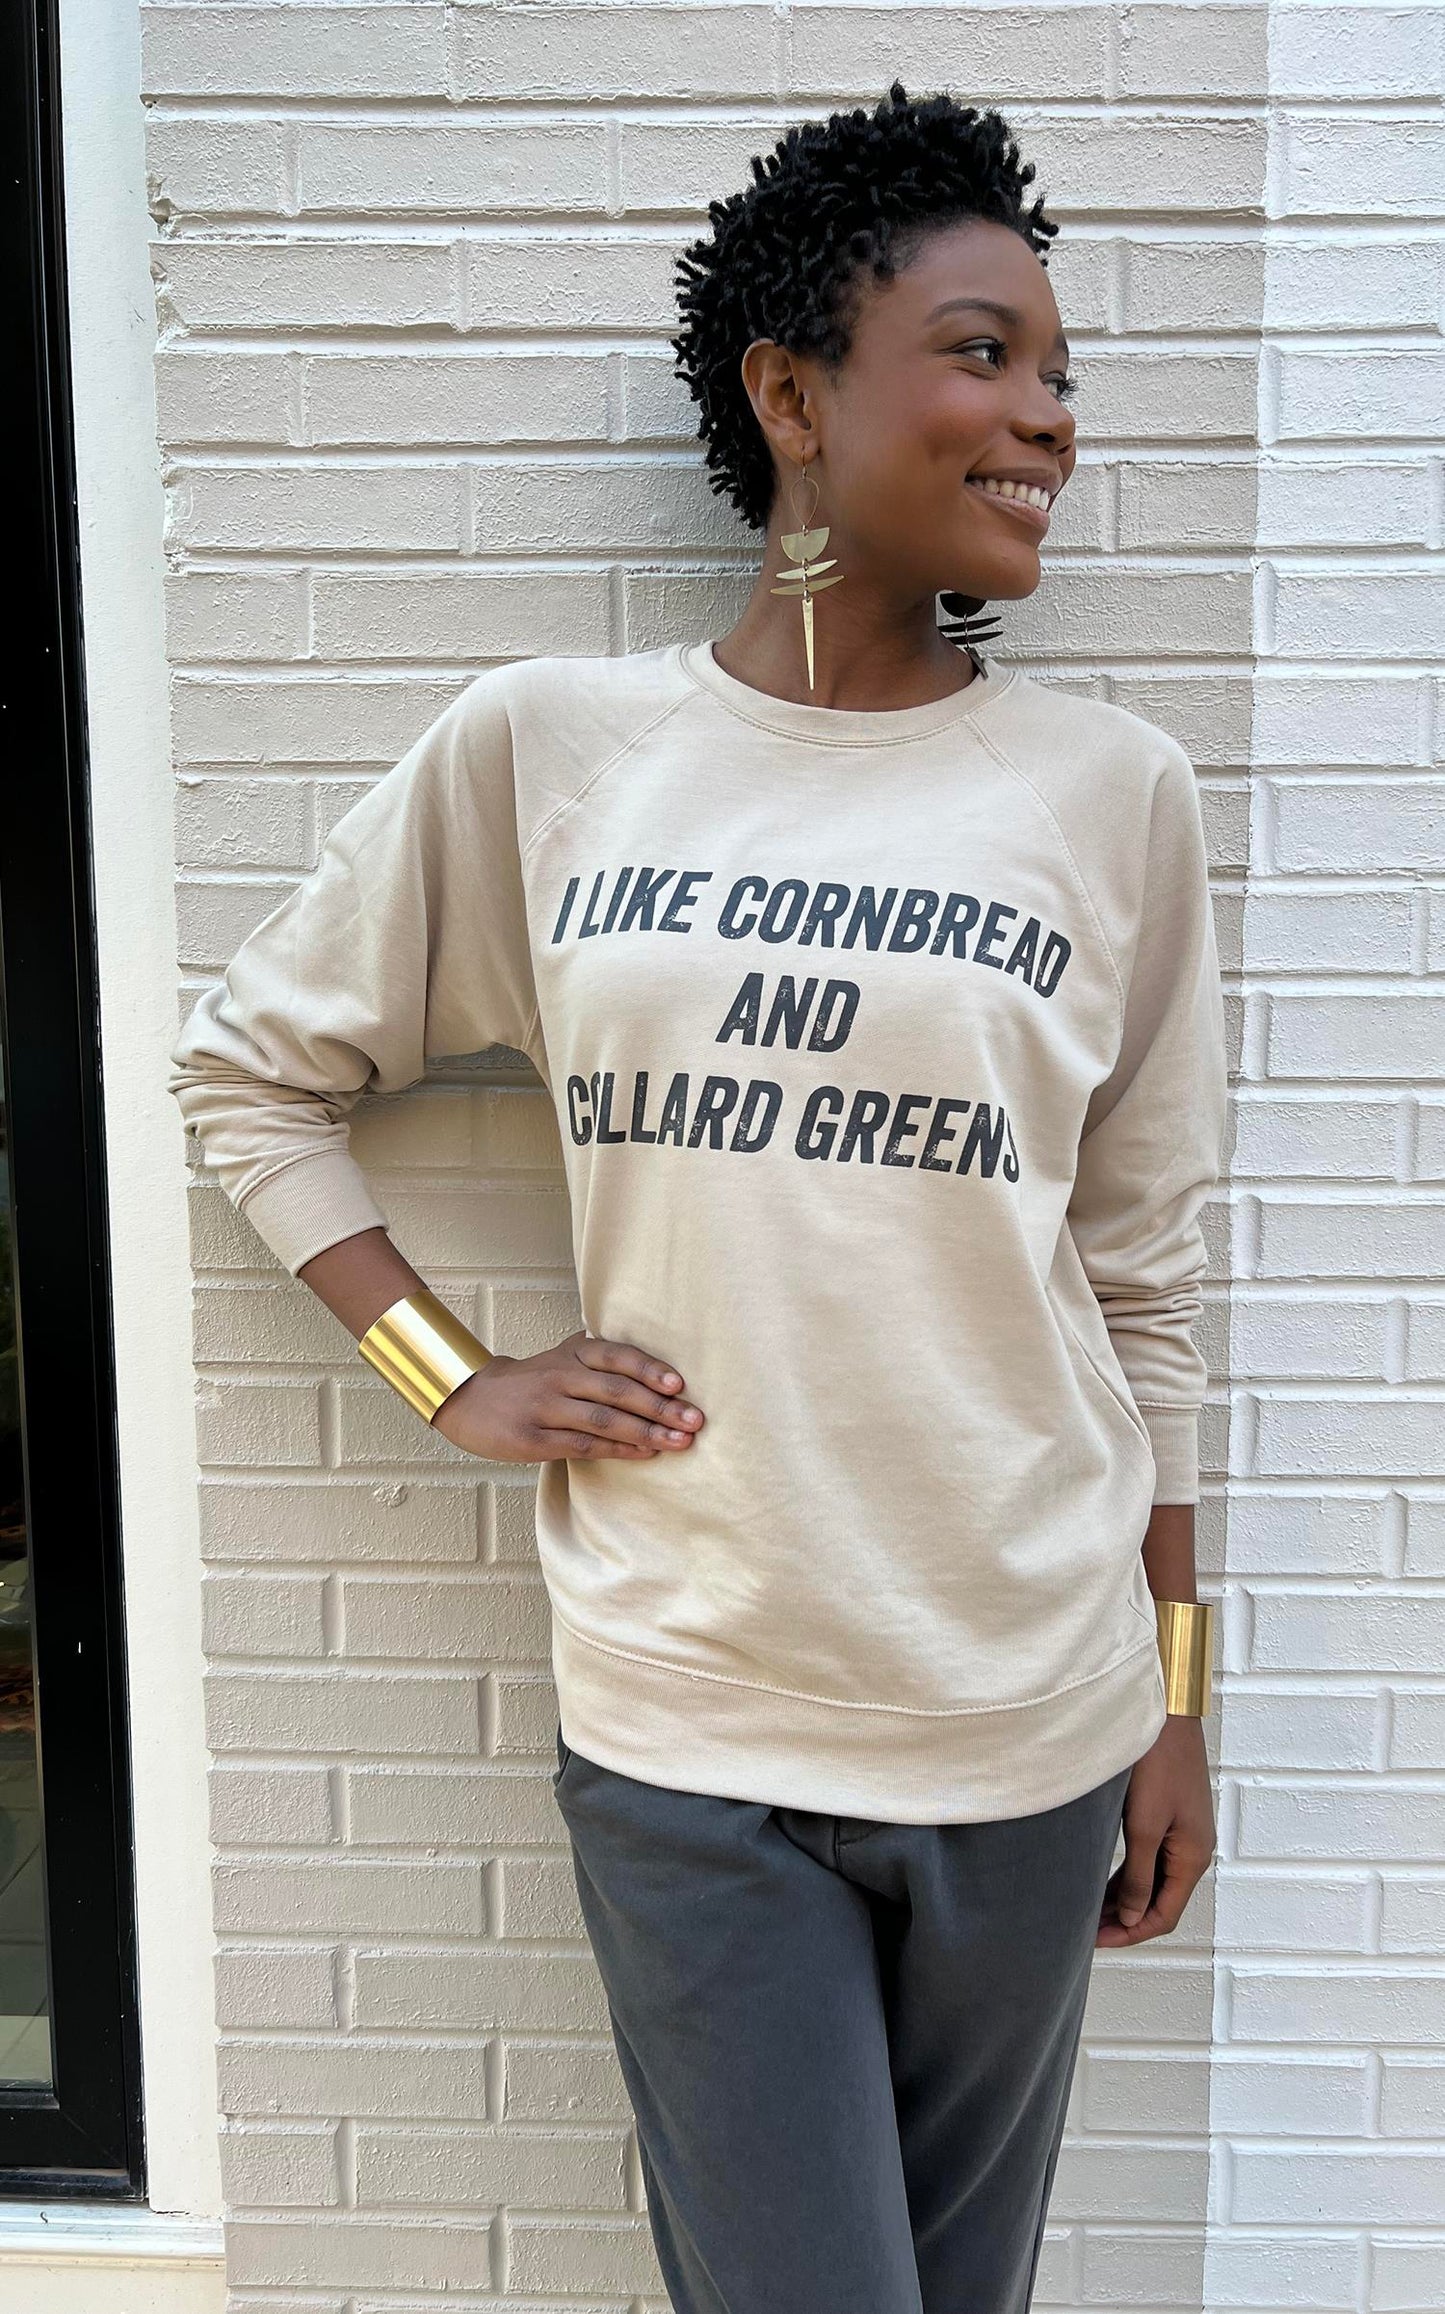 “I Like Cornbread and Collard Greens” Comfy Sweatshirt